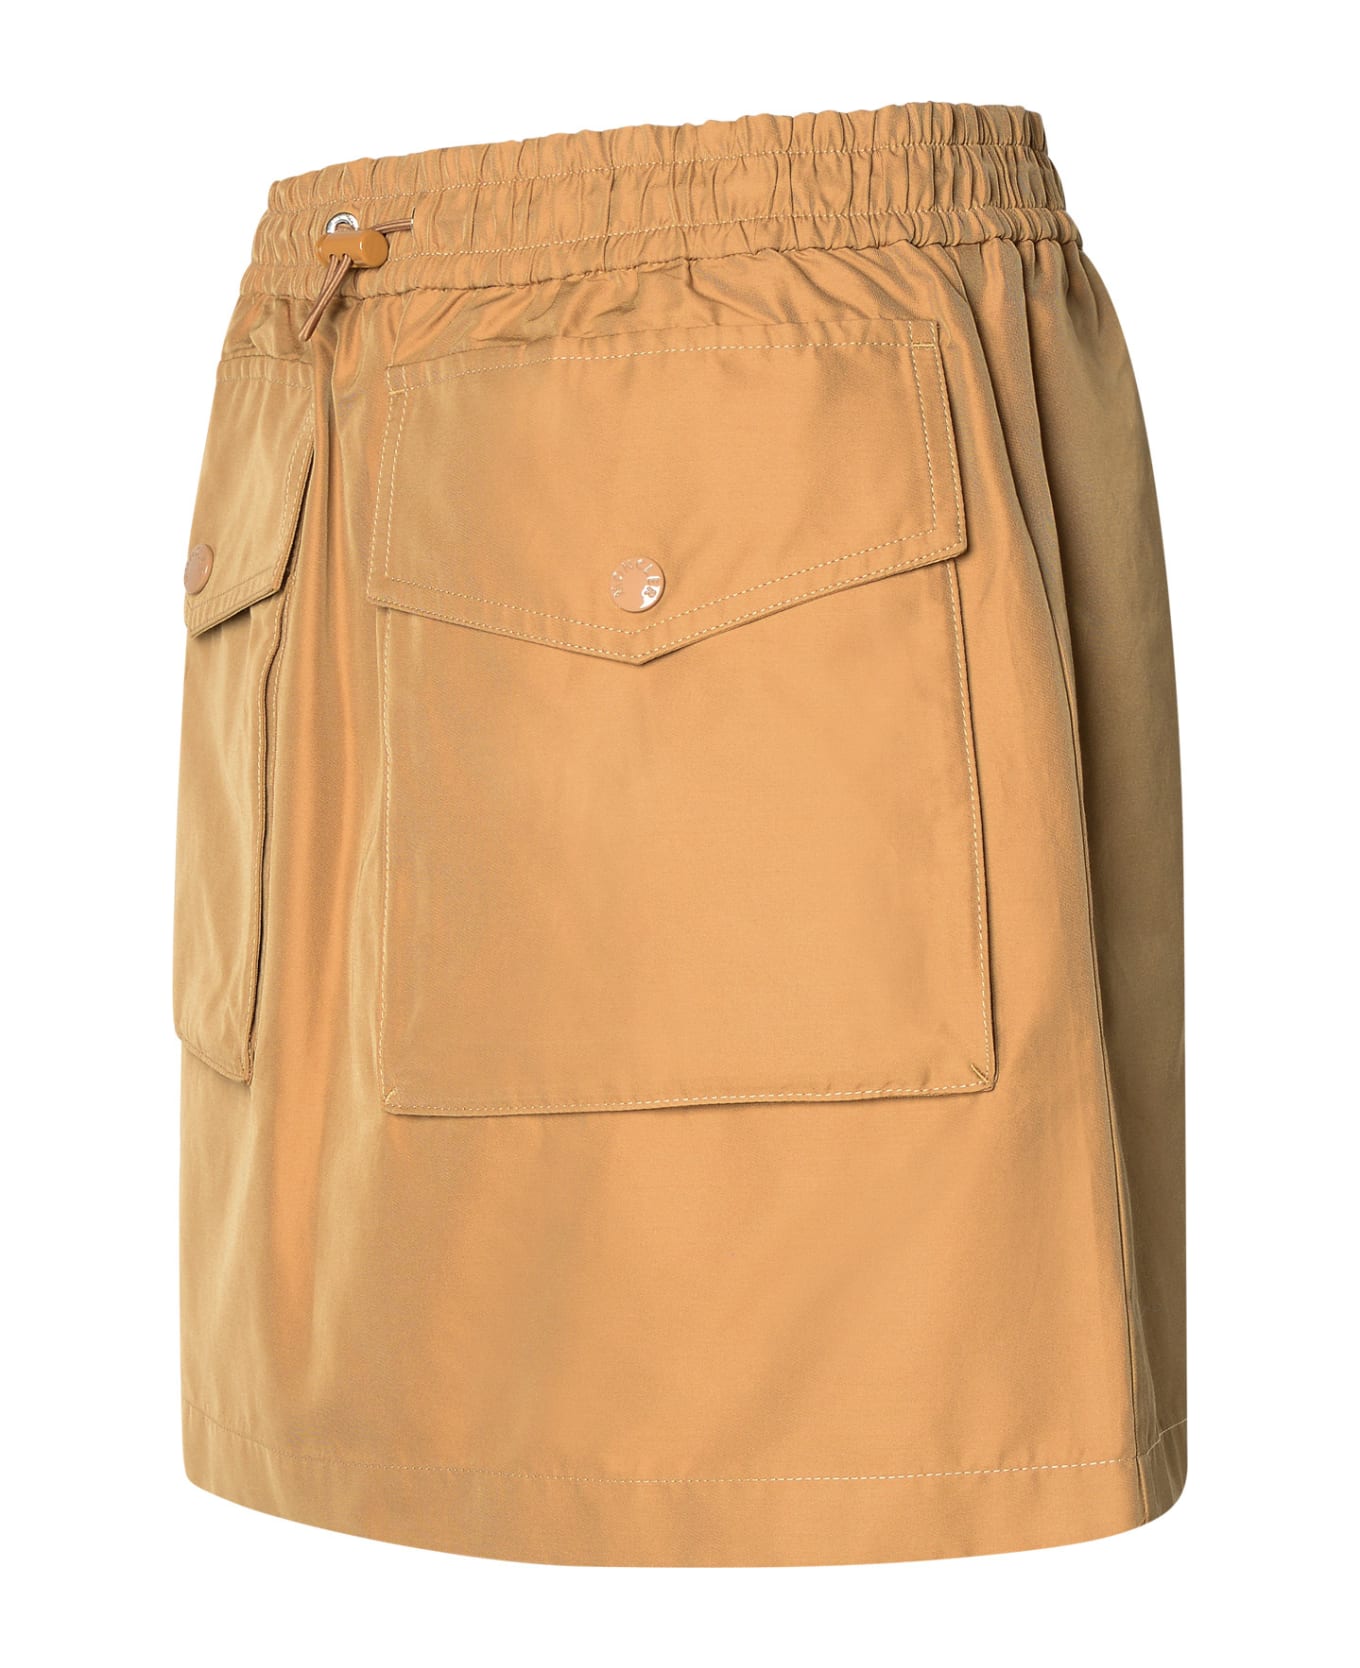 Moncler Cargo Miniskirt In Beige Cotton Blend - Beige スカート